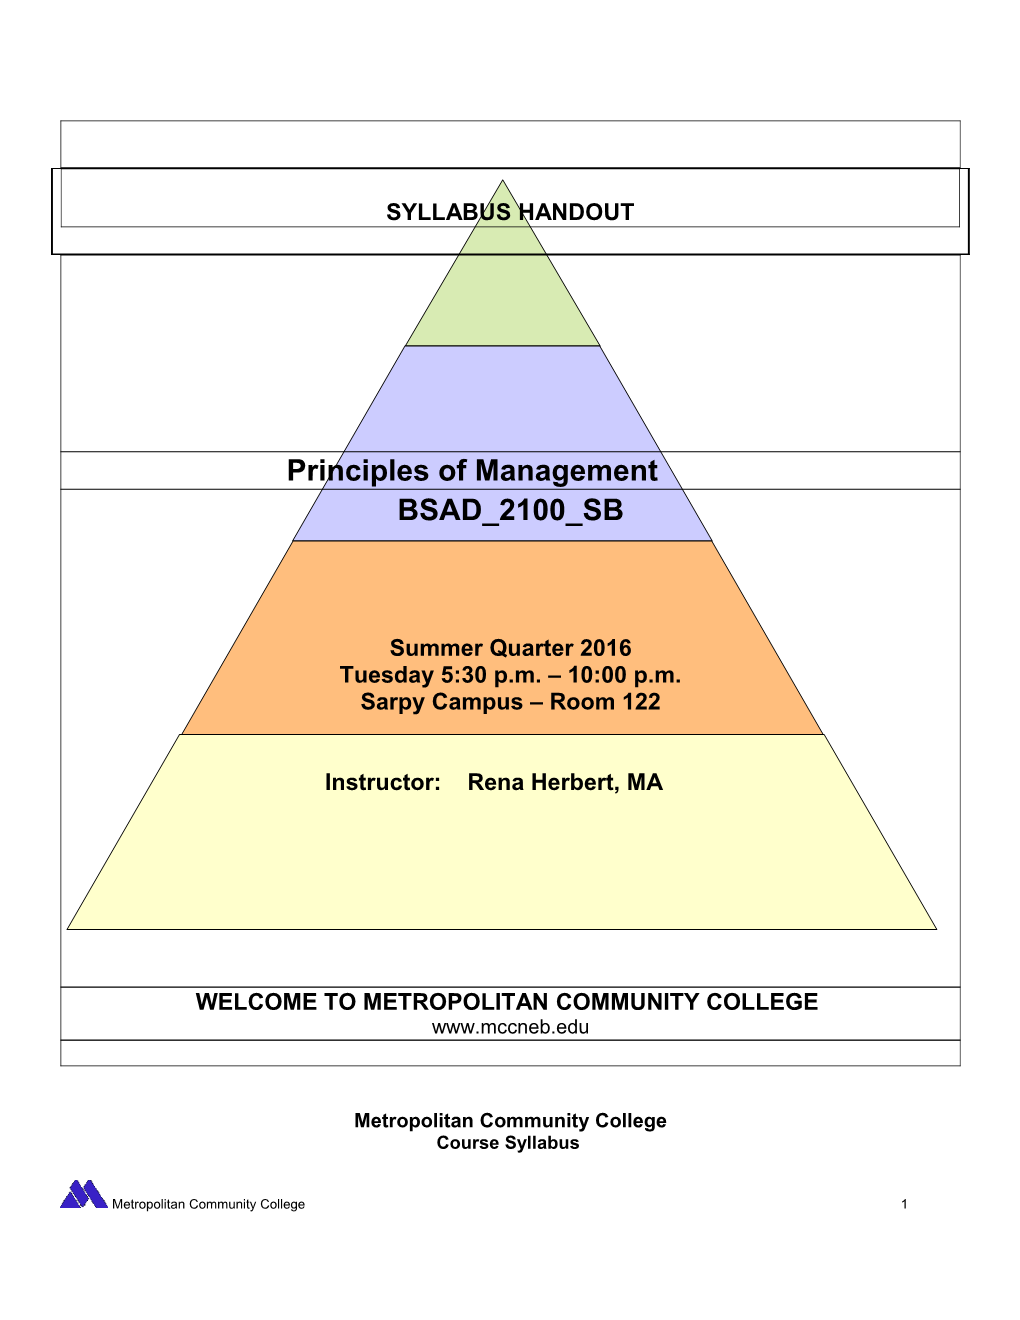 Principles of Management s3